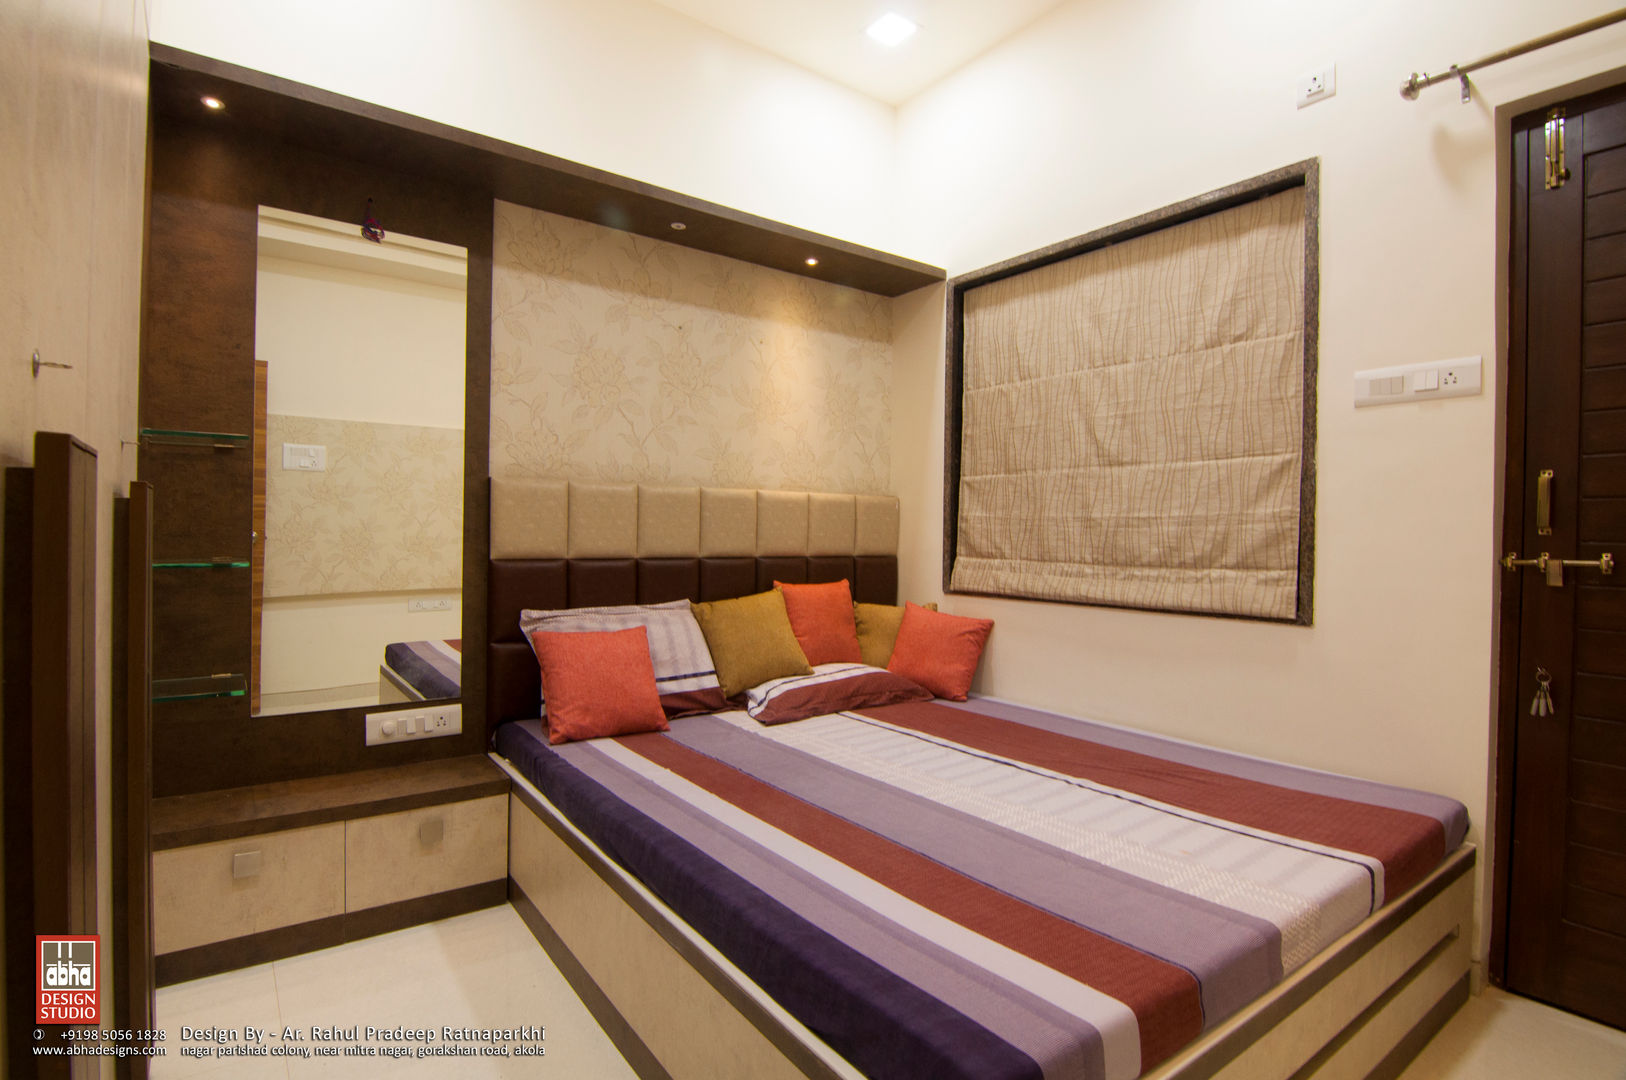 Interior of Residence for Mr. Chandrashekhar R, ABHA Design Studio ABHA Design Studio Dormitorios de estilo minimalista Camas y cabeceras